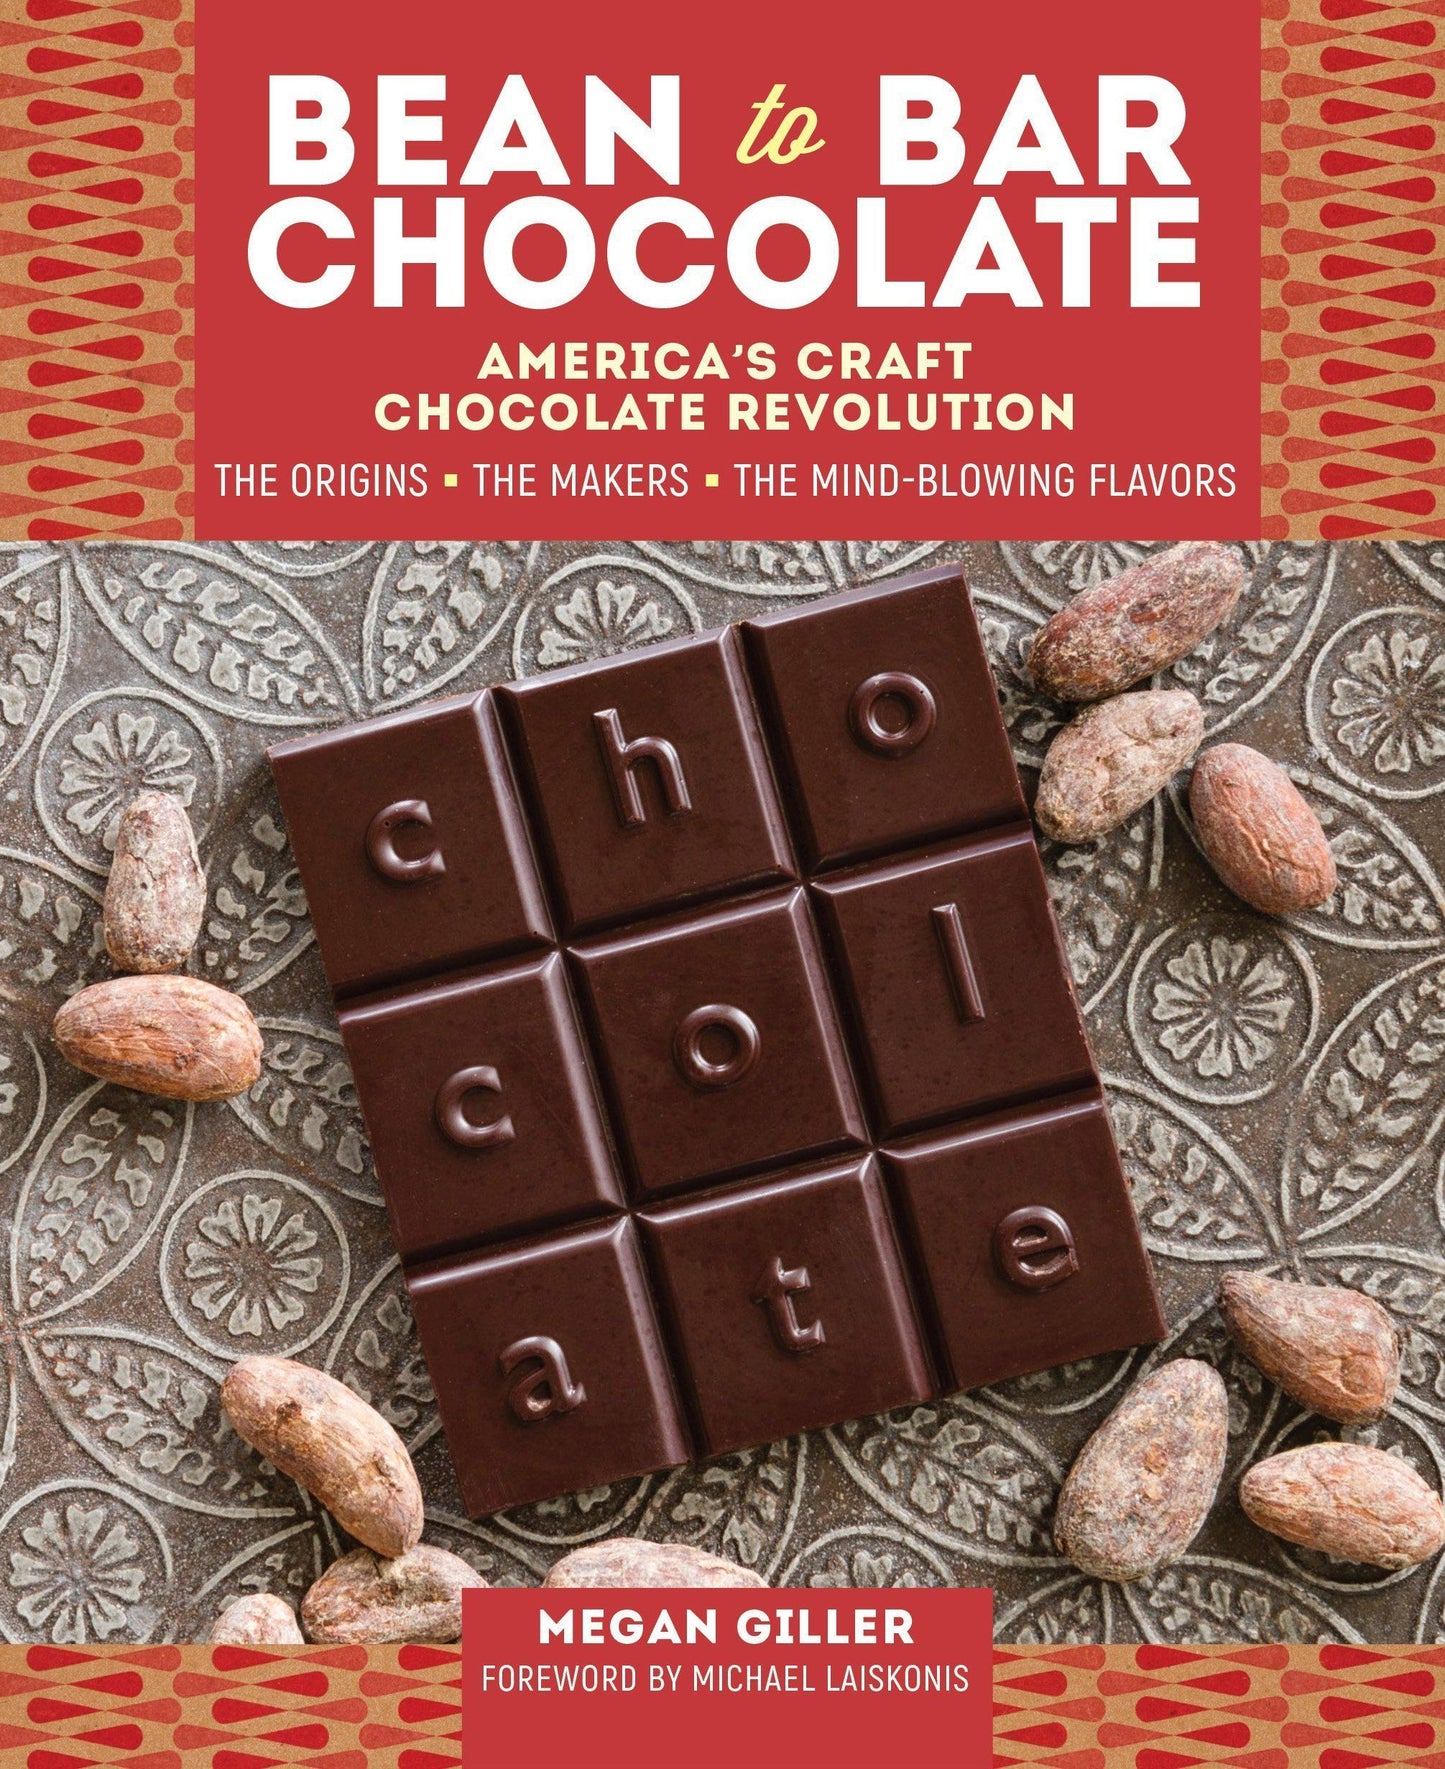 Bean-to-Bar Chocolate: America's Craft Chocolate Revolution